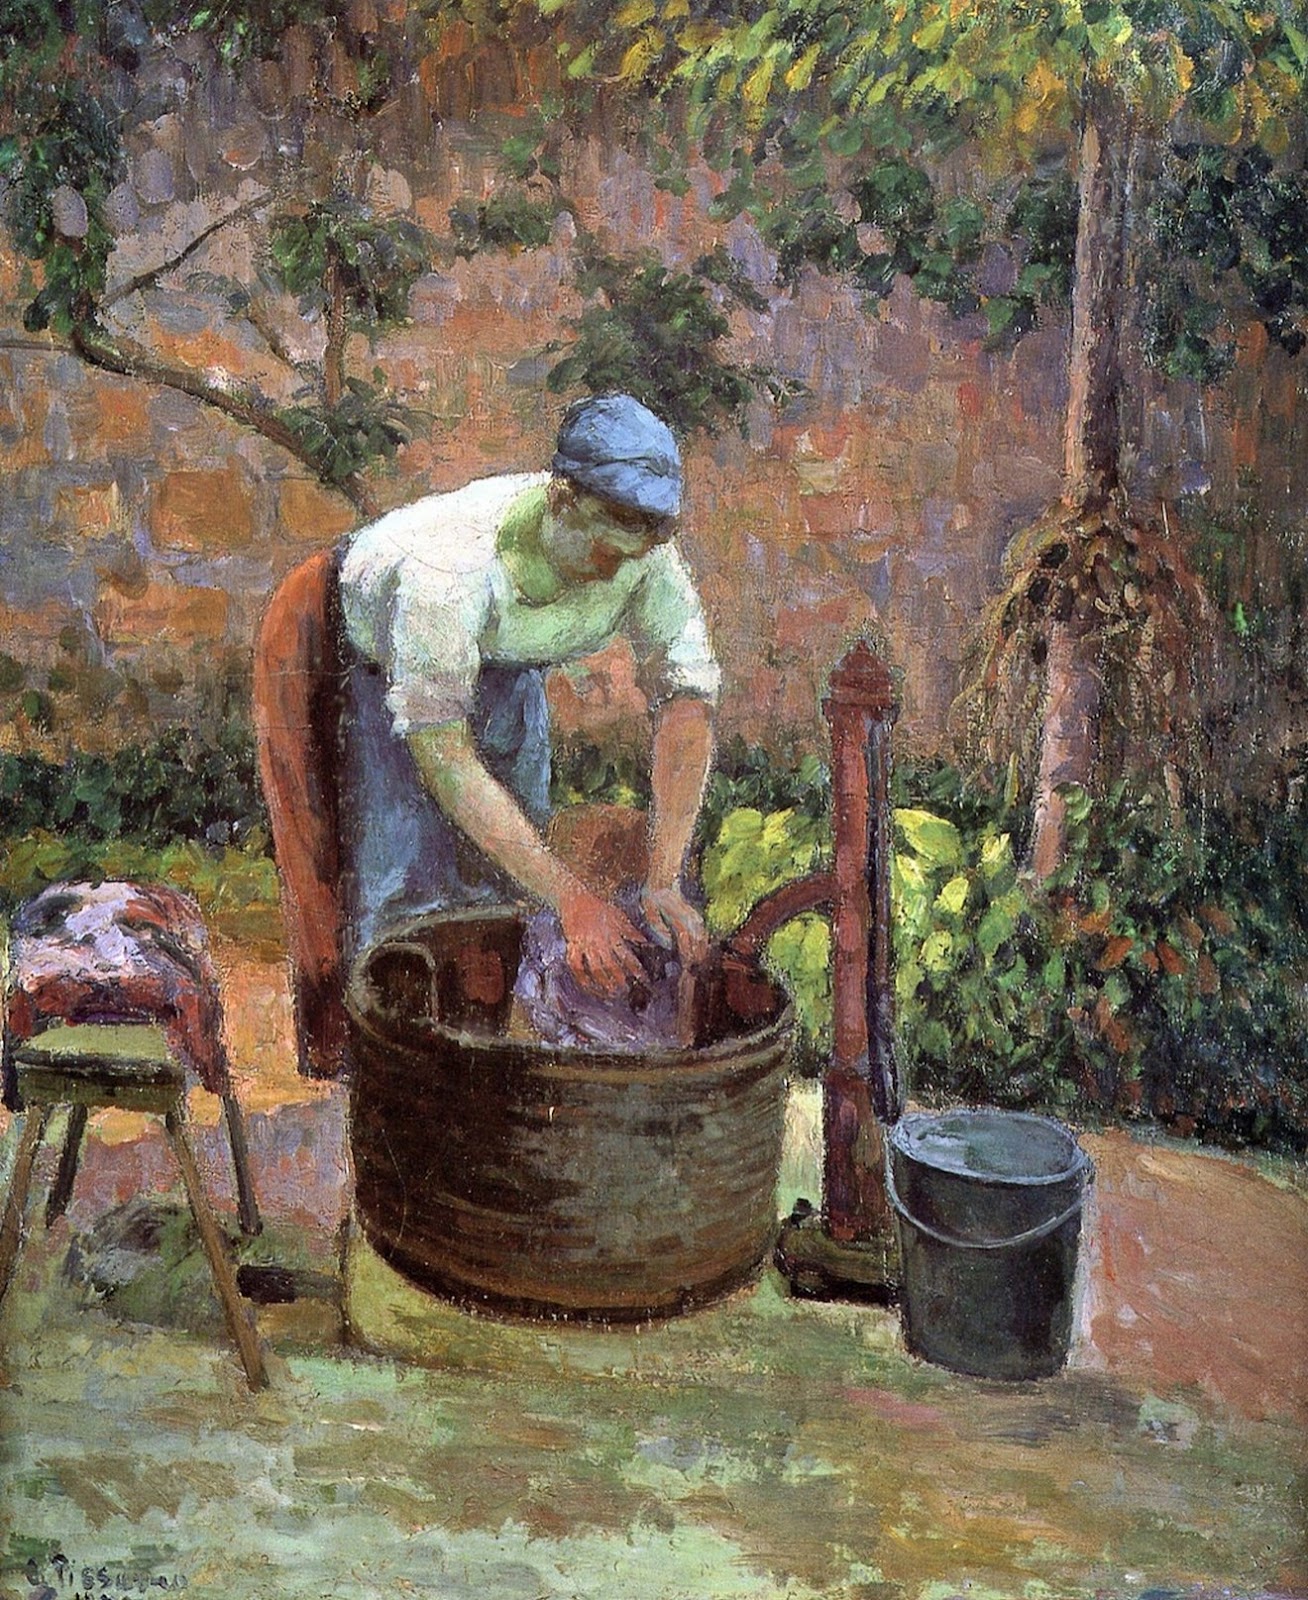 Camille+Pissarro-1830-1903 (250).jpg